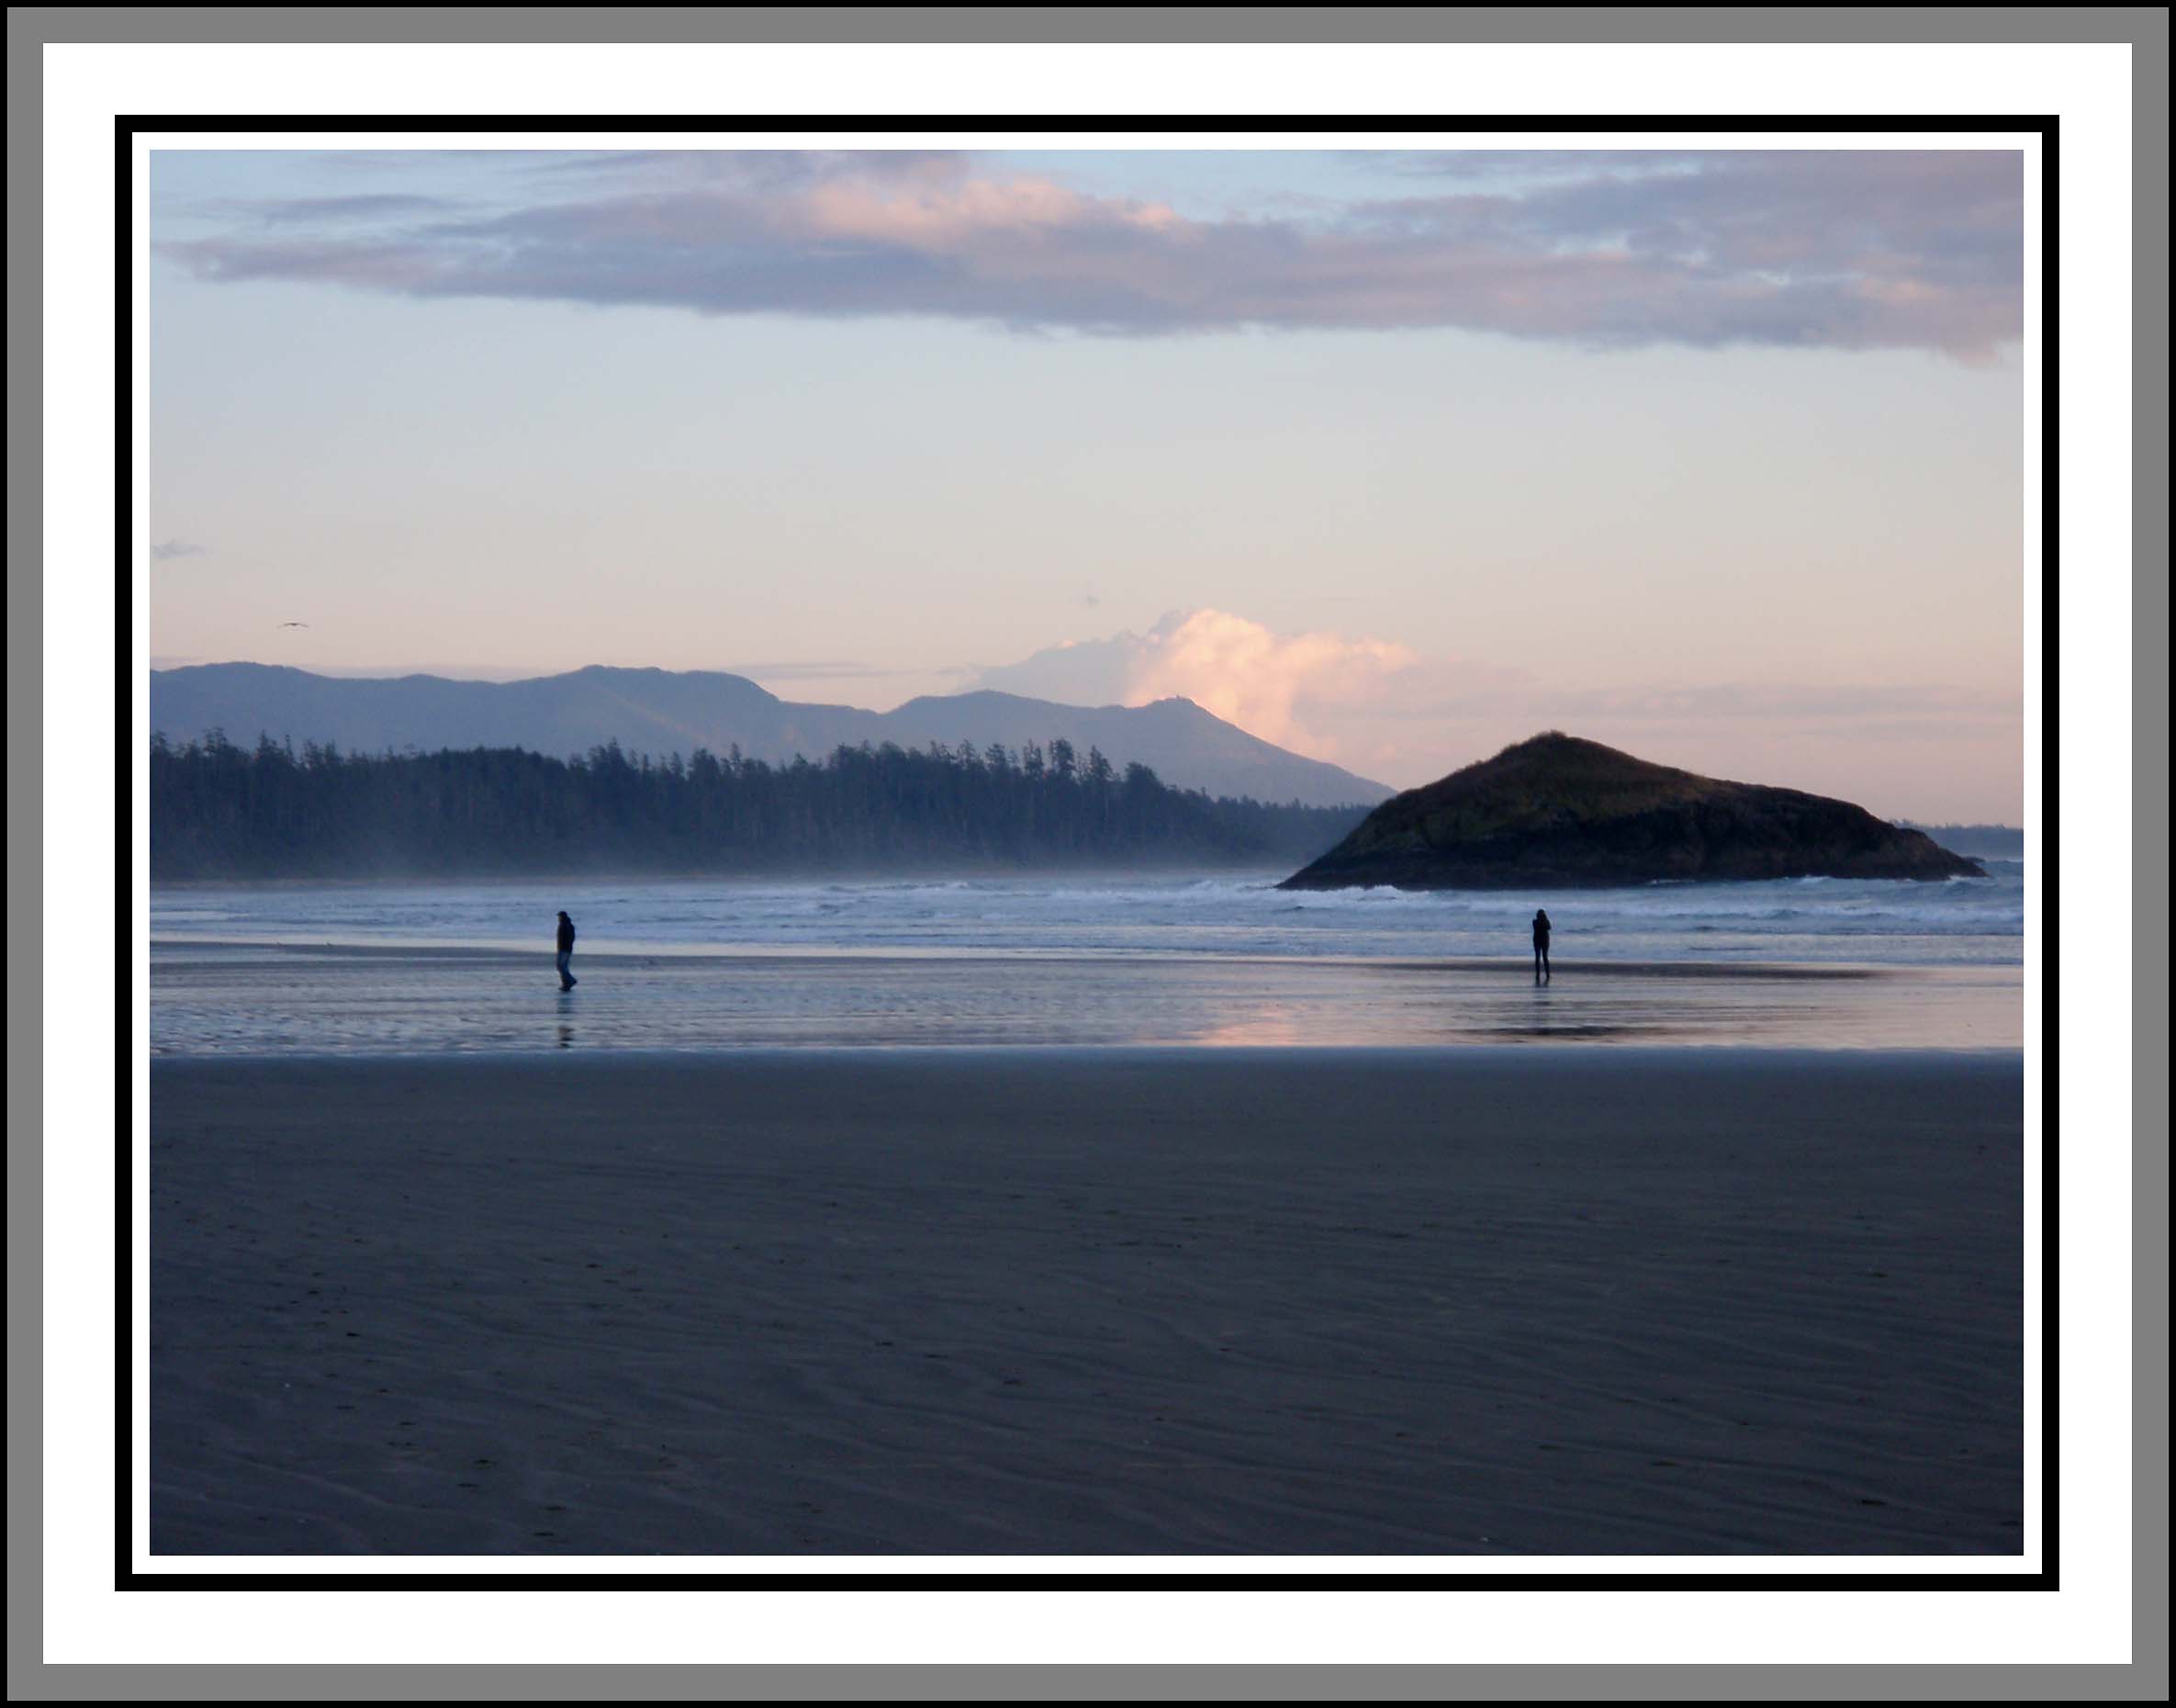 Pacific Rim National Park Vancouver Island